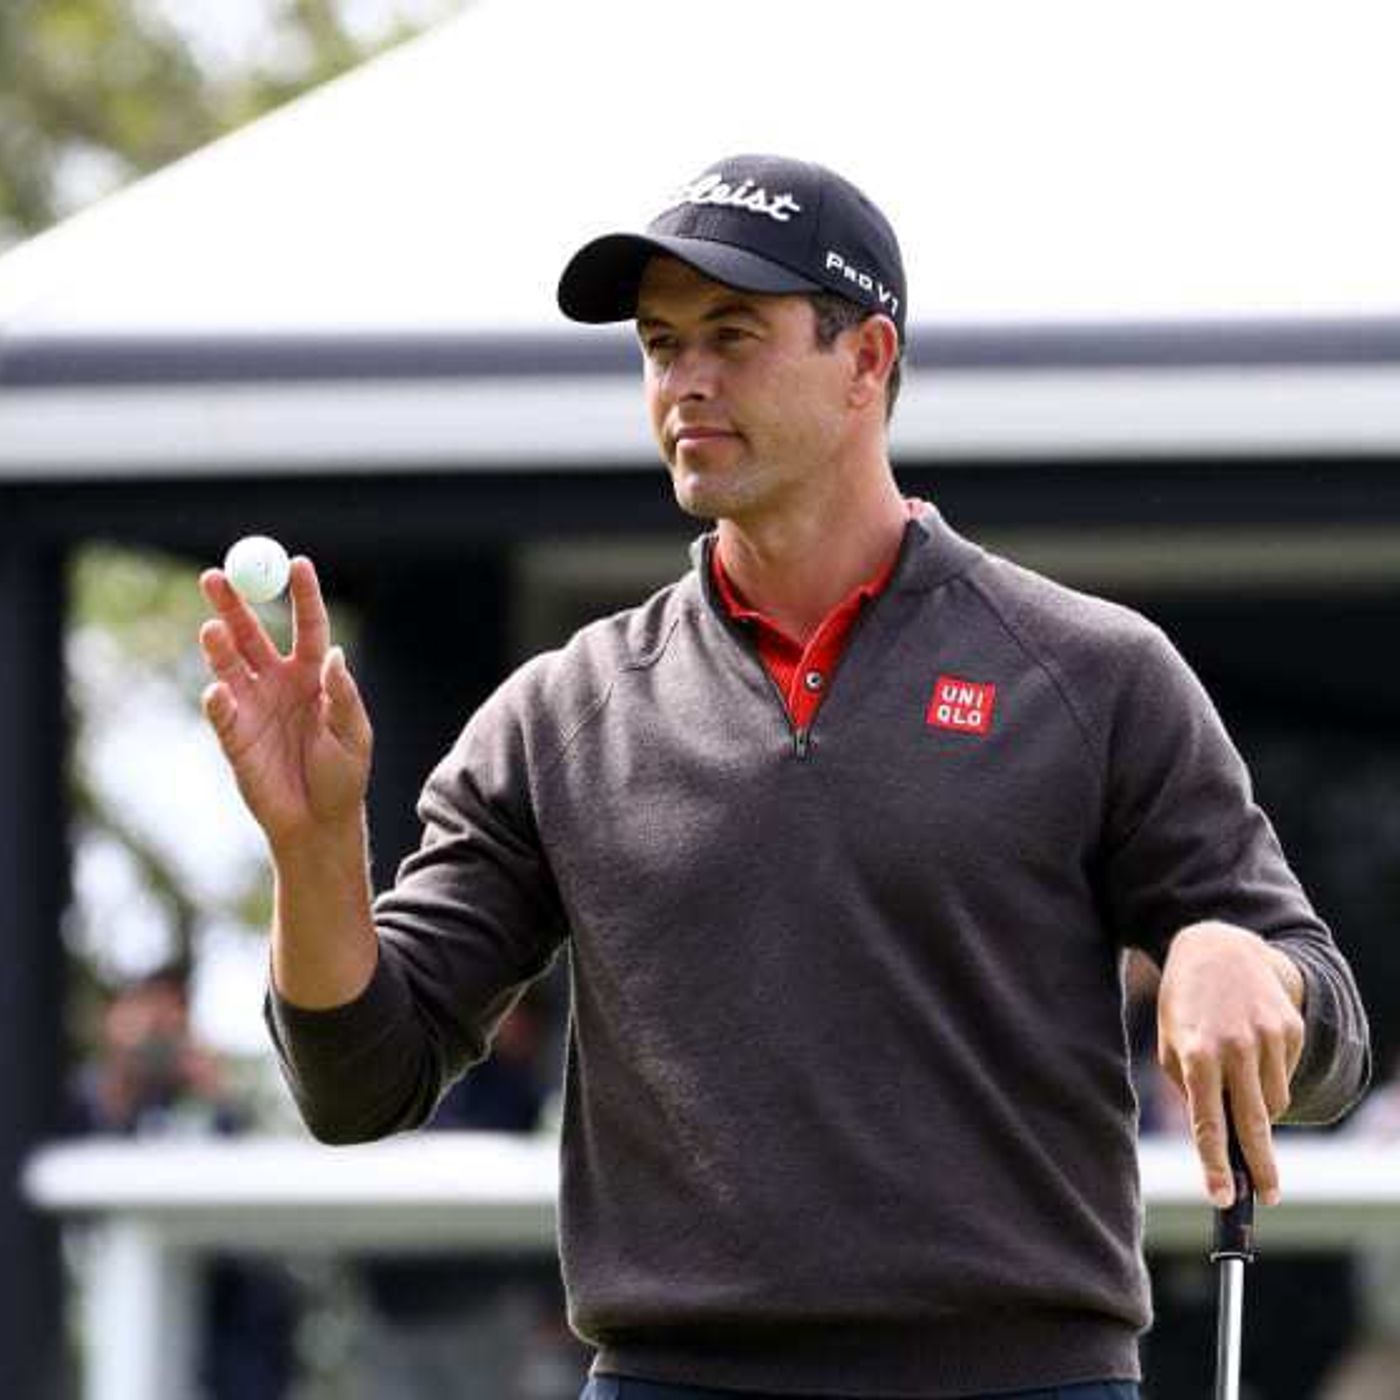 Adam Scott headlines the Australian PGA Championship